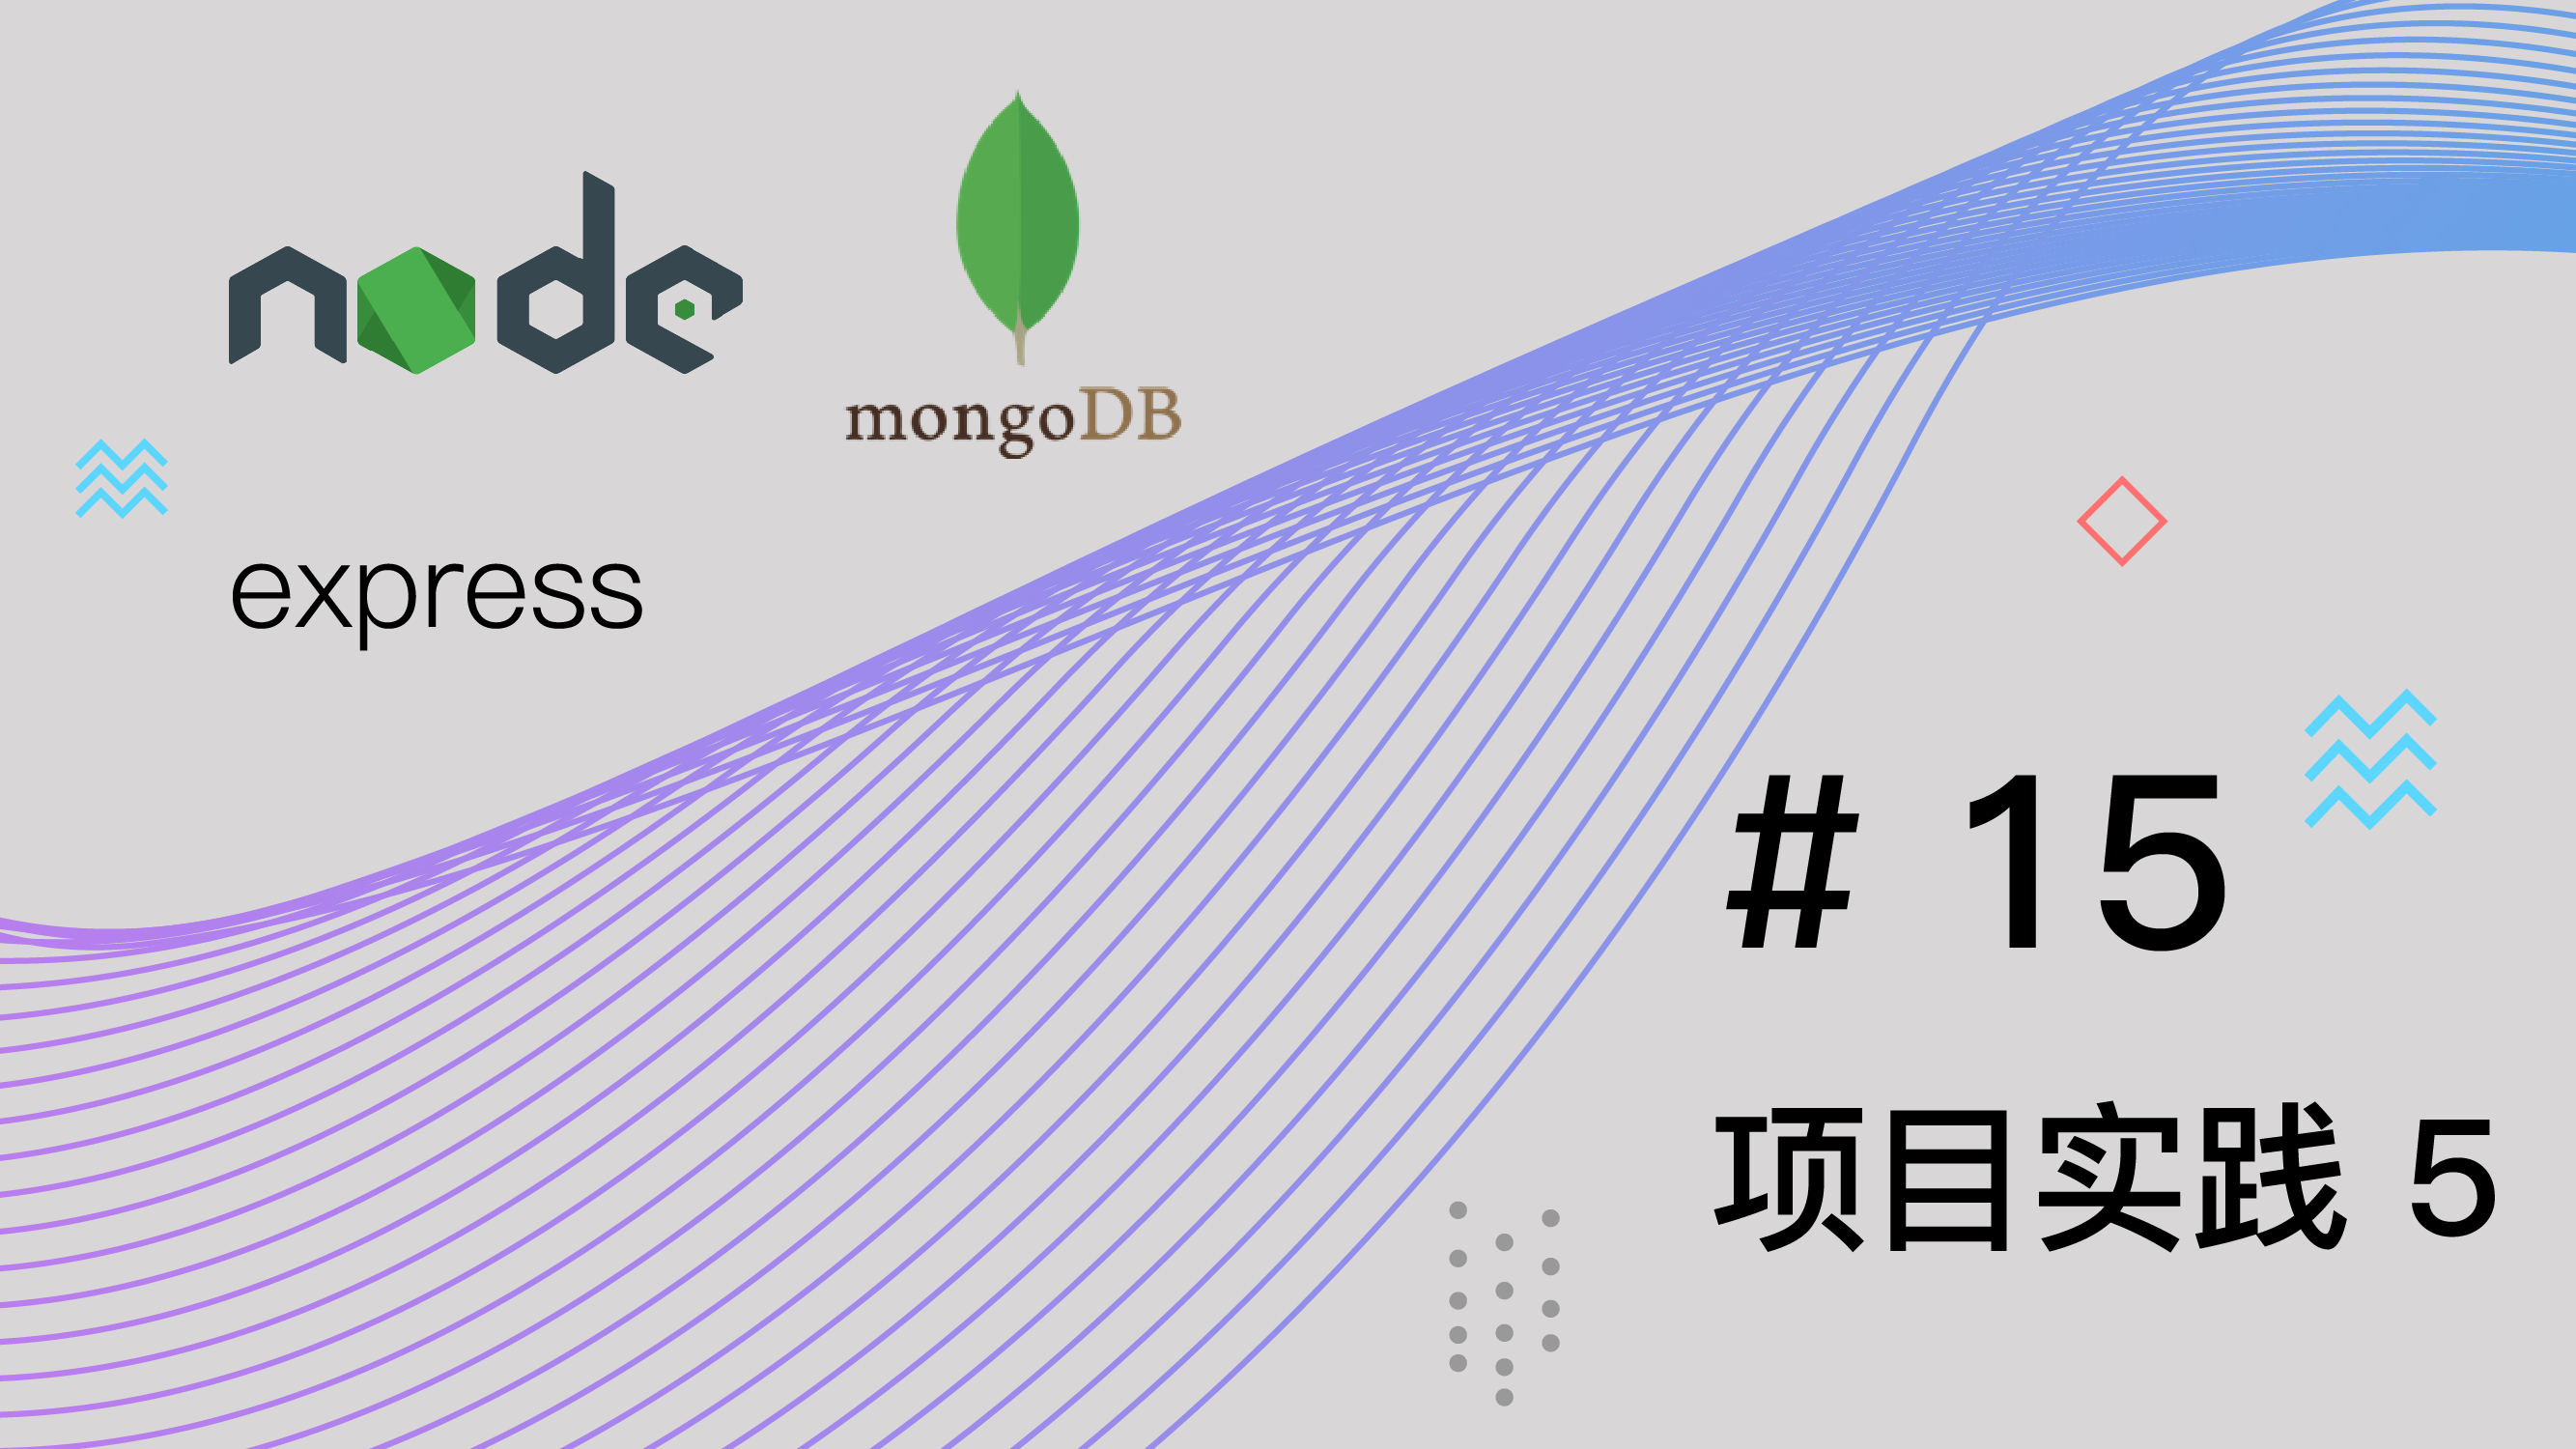 Node.js + Express + MongoDB 基础篇视频教程 #15 项目实践 part 5 MongoDB & mLab 